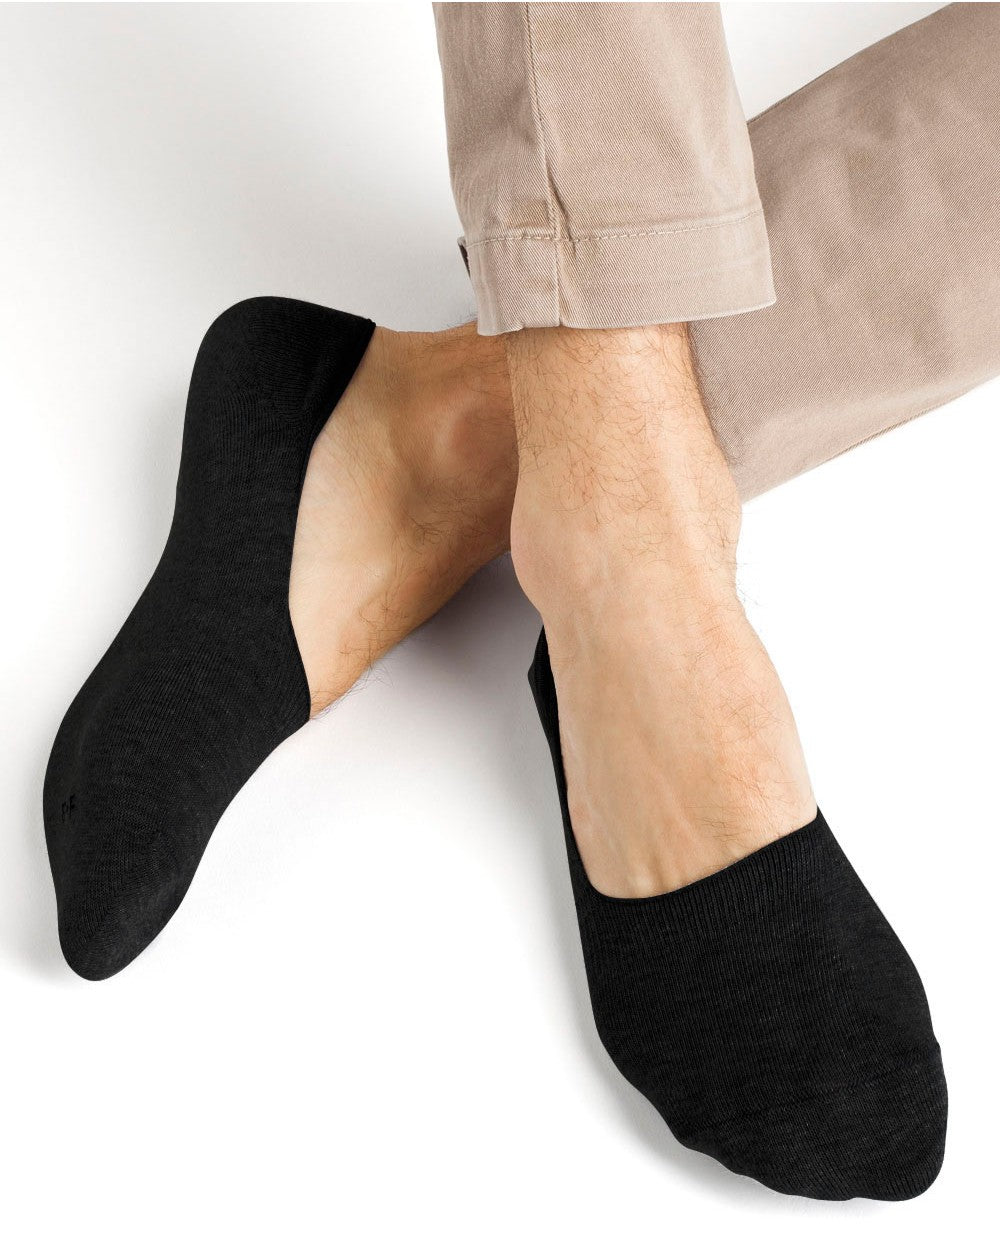 Bleuforet No-Show Cotton Foot Protection Socks